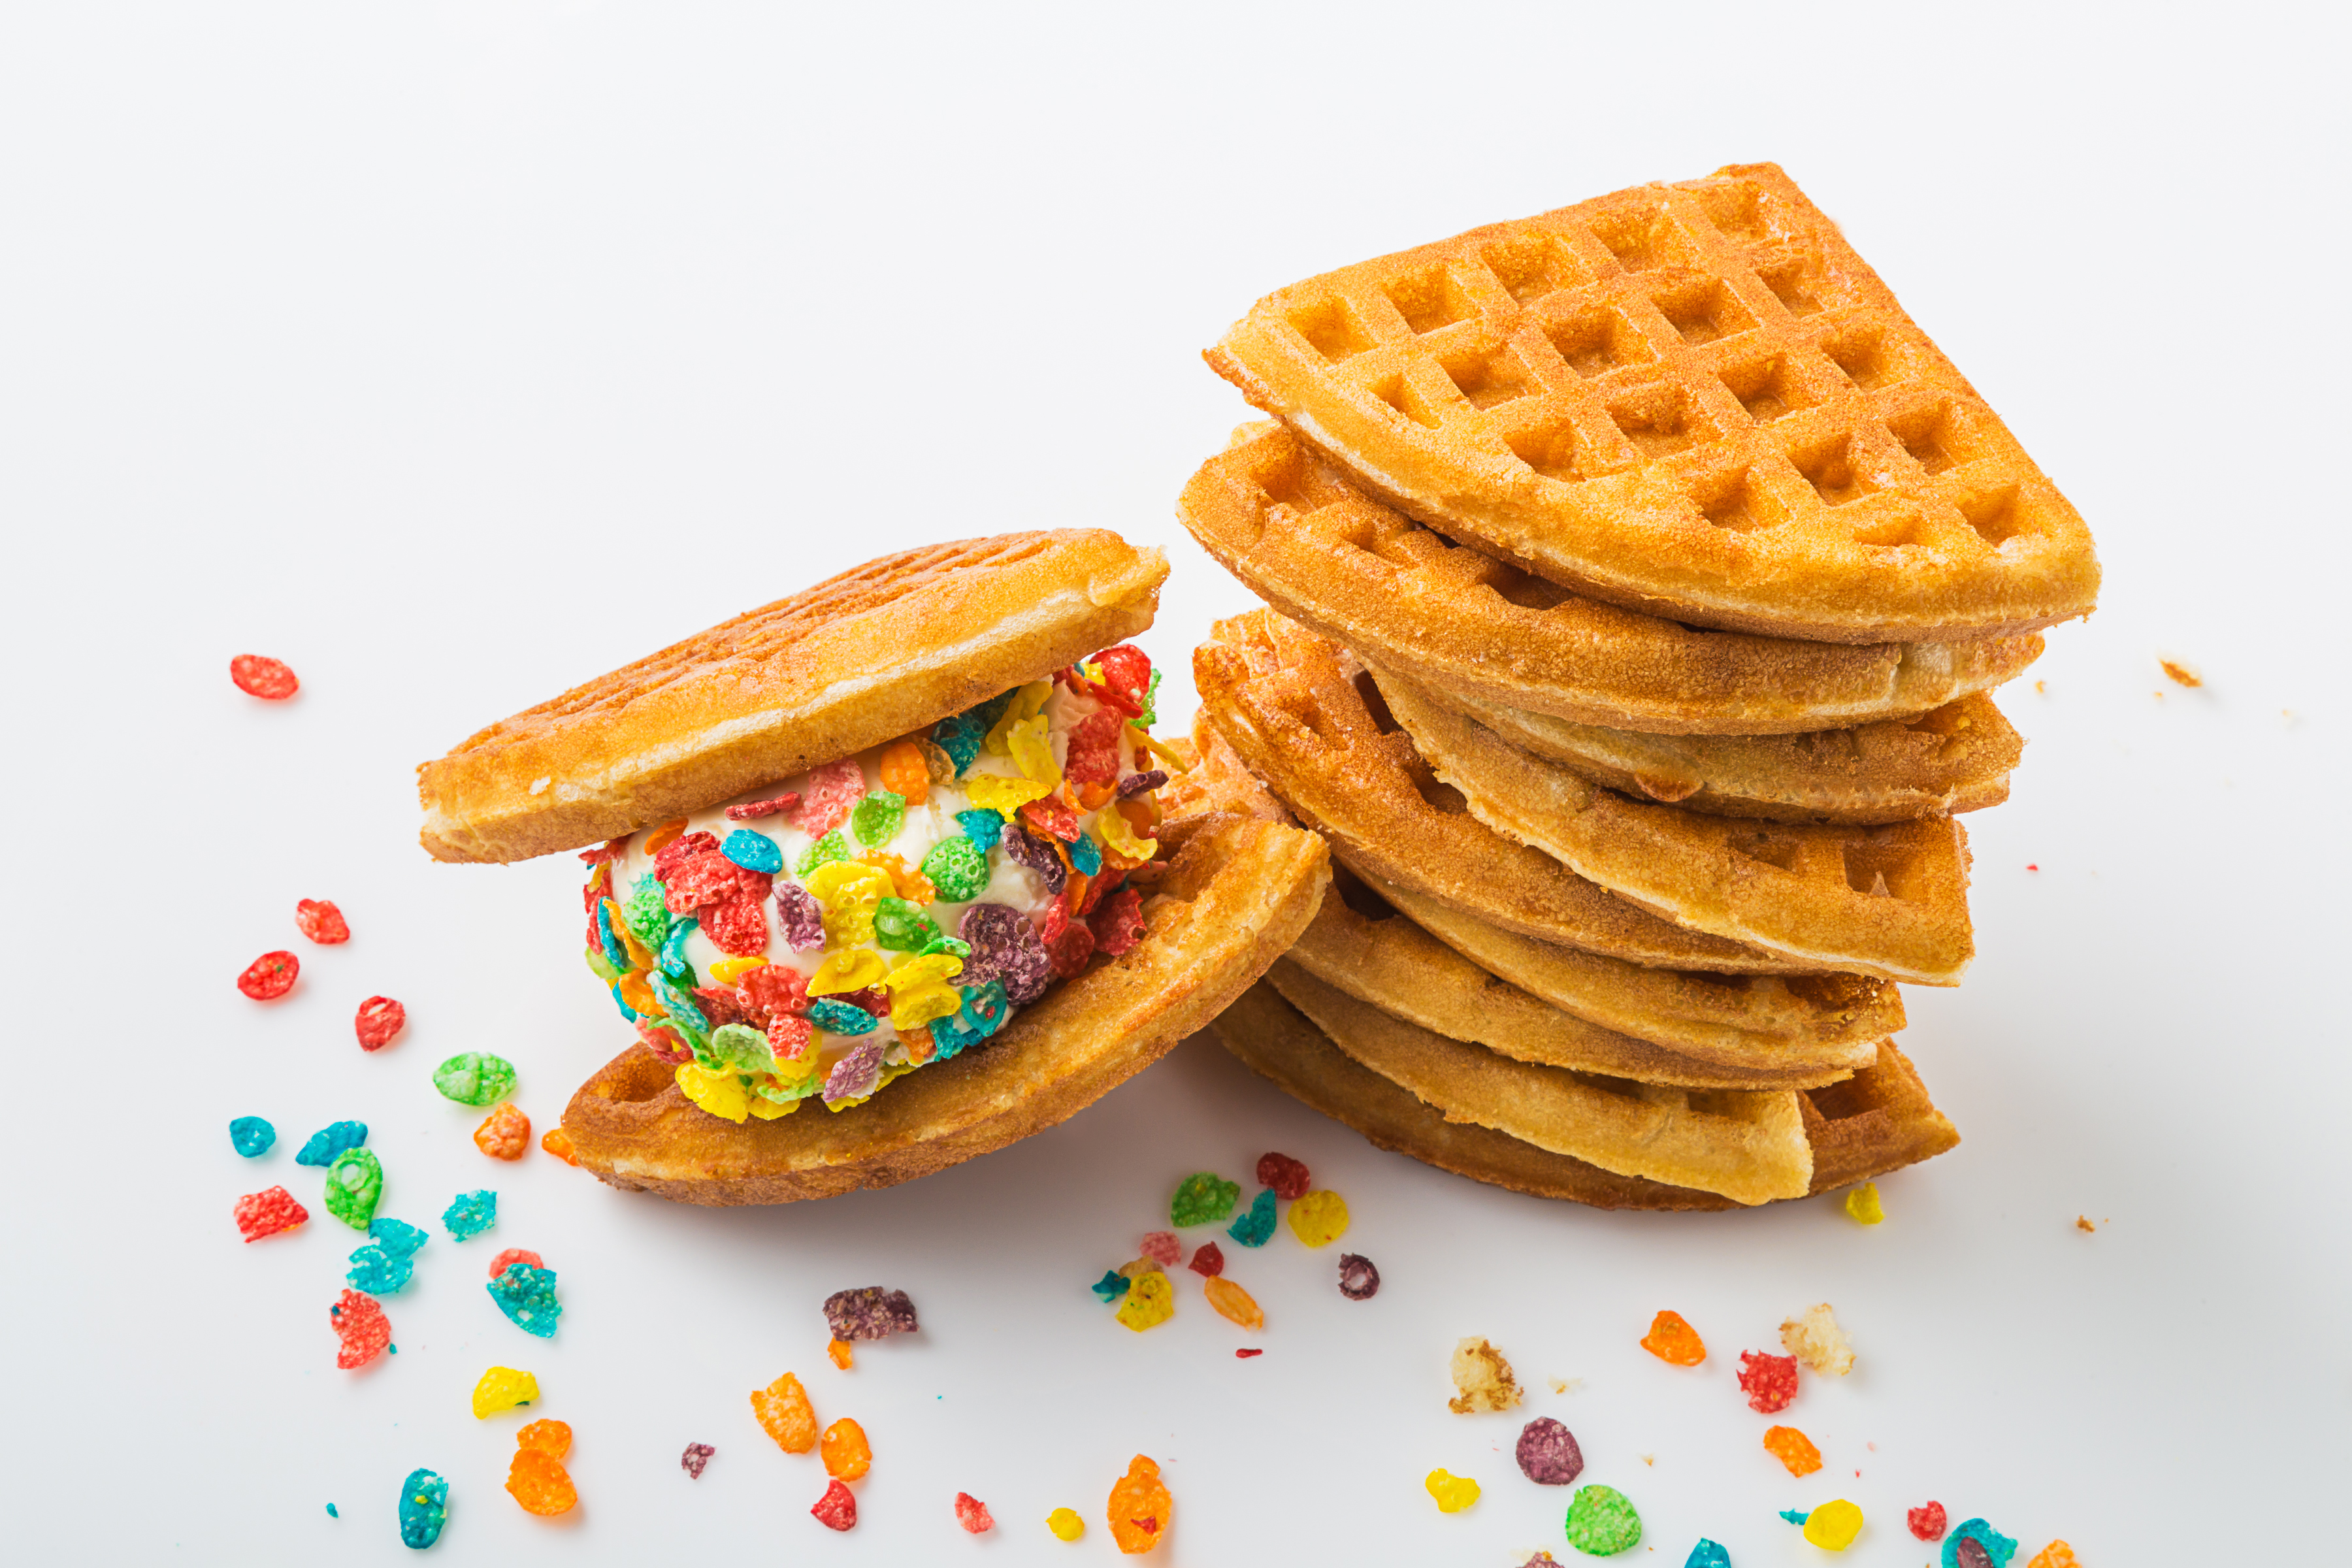 Waffles + ice cream = dessert win!